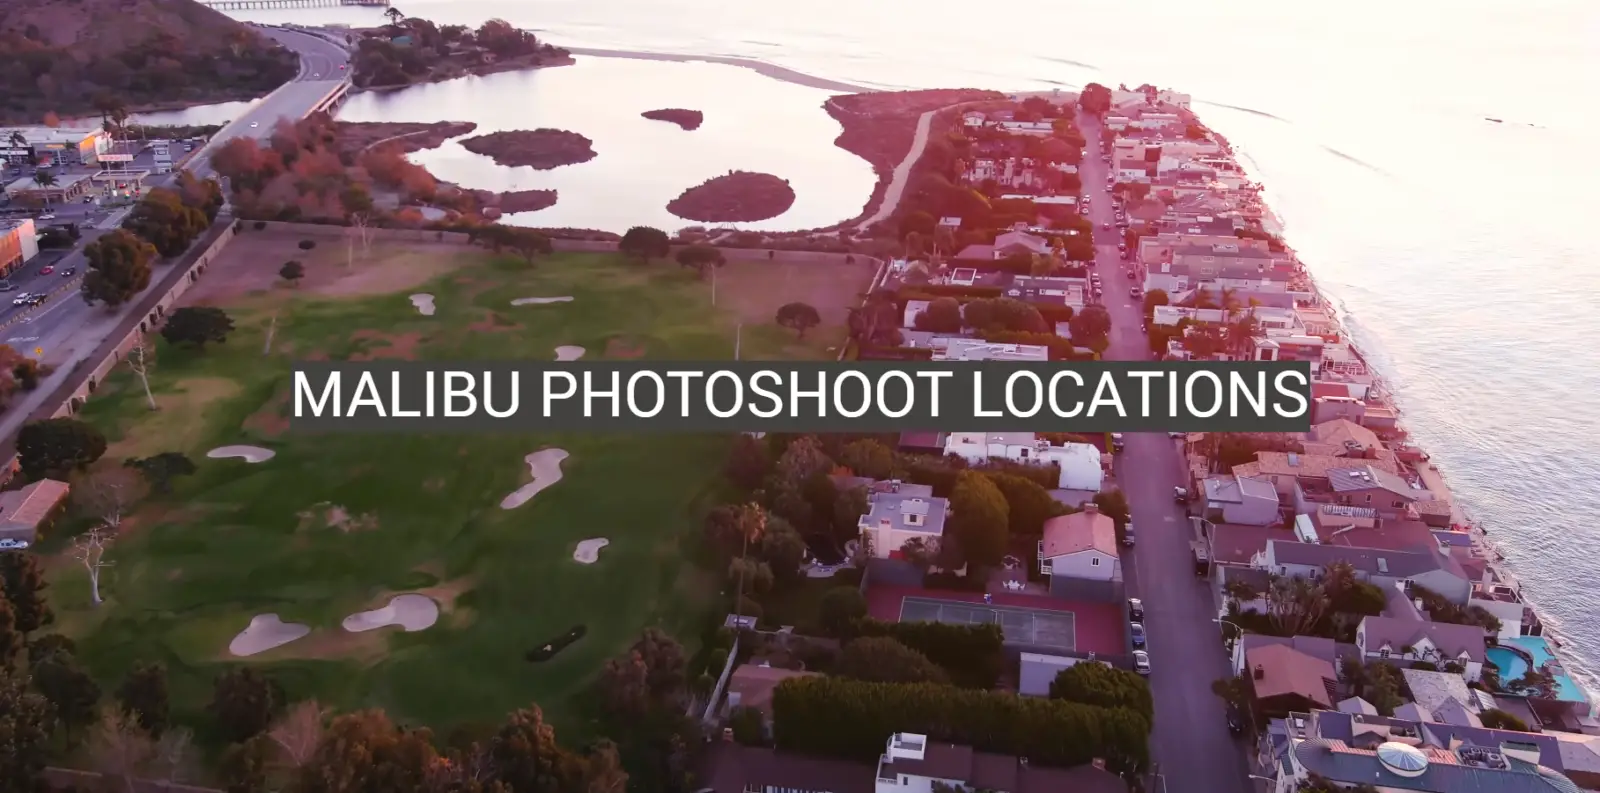 Malibu Photoshoot Locations